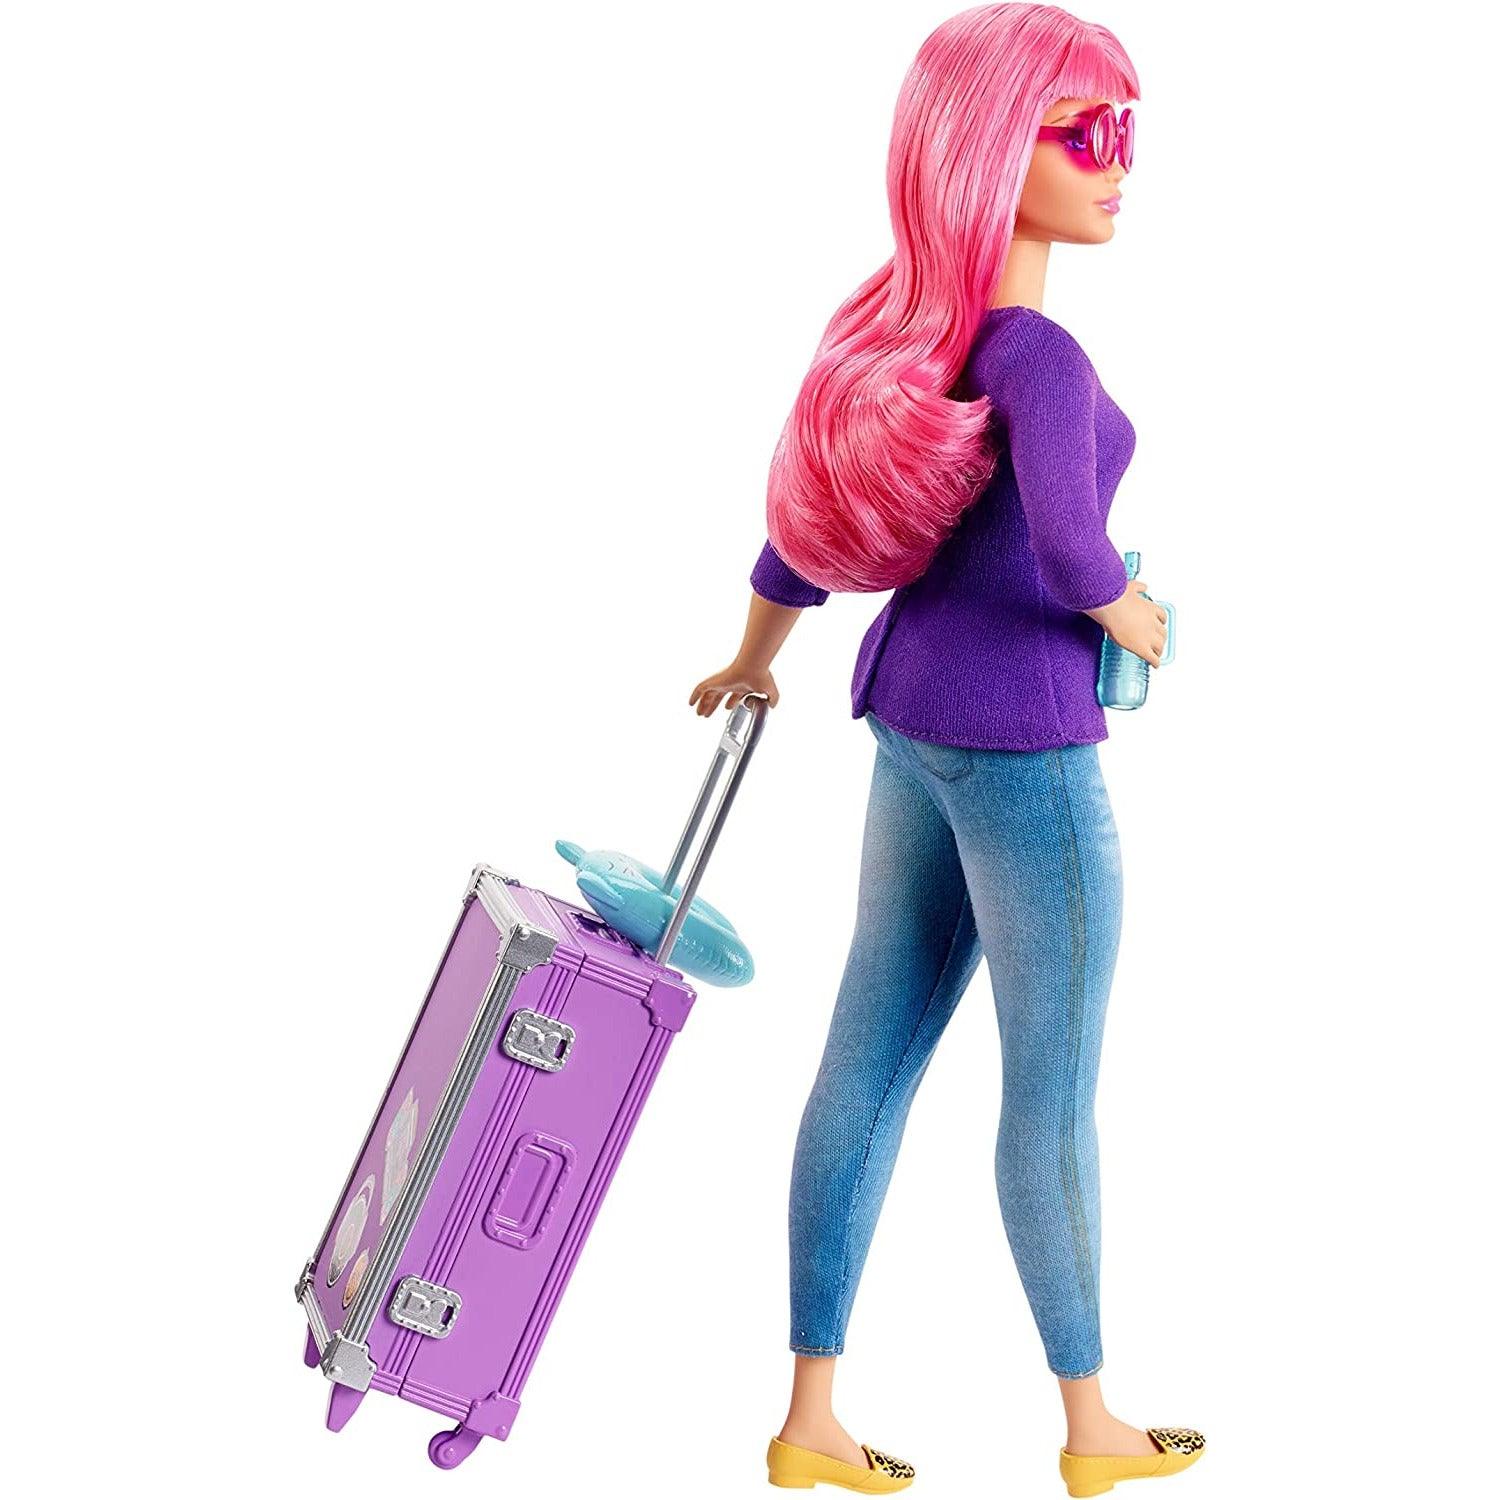 Barbie Dreamhouse Adventures Doll & Accessories, Travel Set with Daisy Doll, Kitten, Working Suitcase & 9 Pieces - BumbleToys - 2-4 Years, 3+ years, 4+ Years, 5-7 Years, Barbie, Dolls, Fashion Dolls & Accessories, Girls